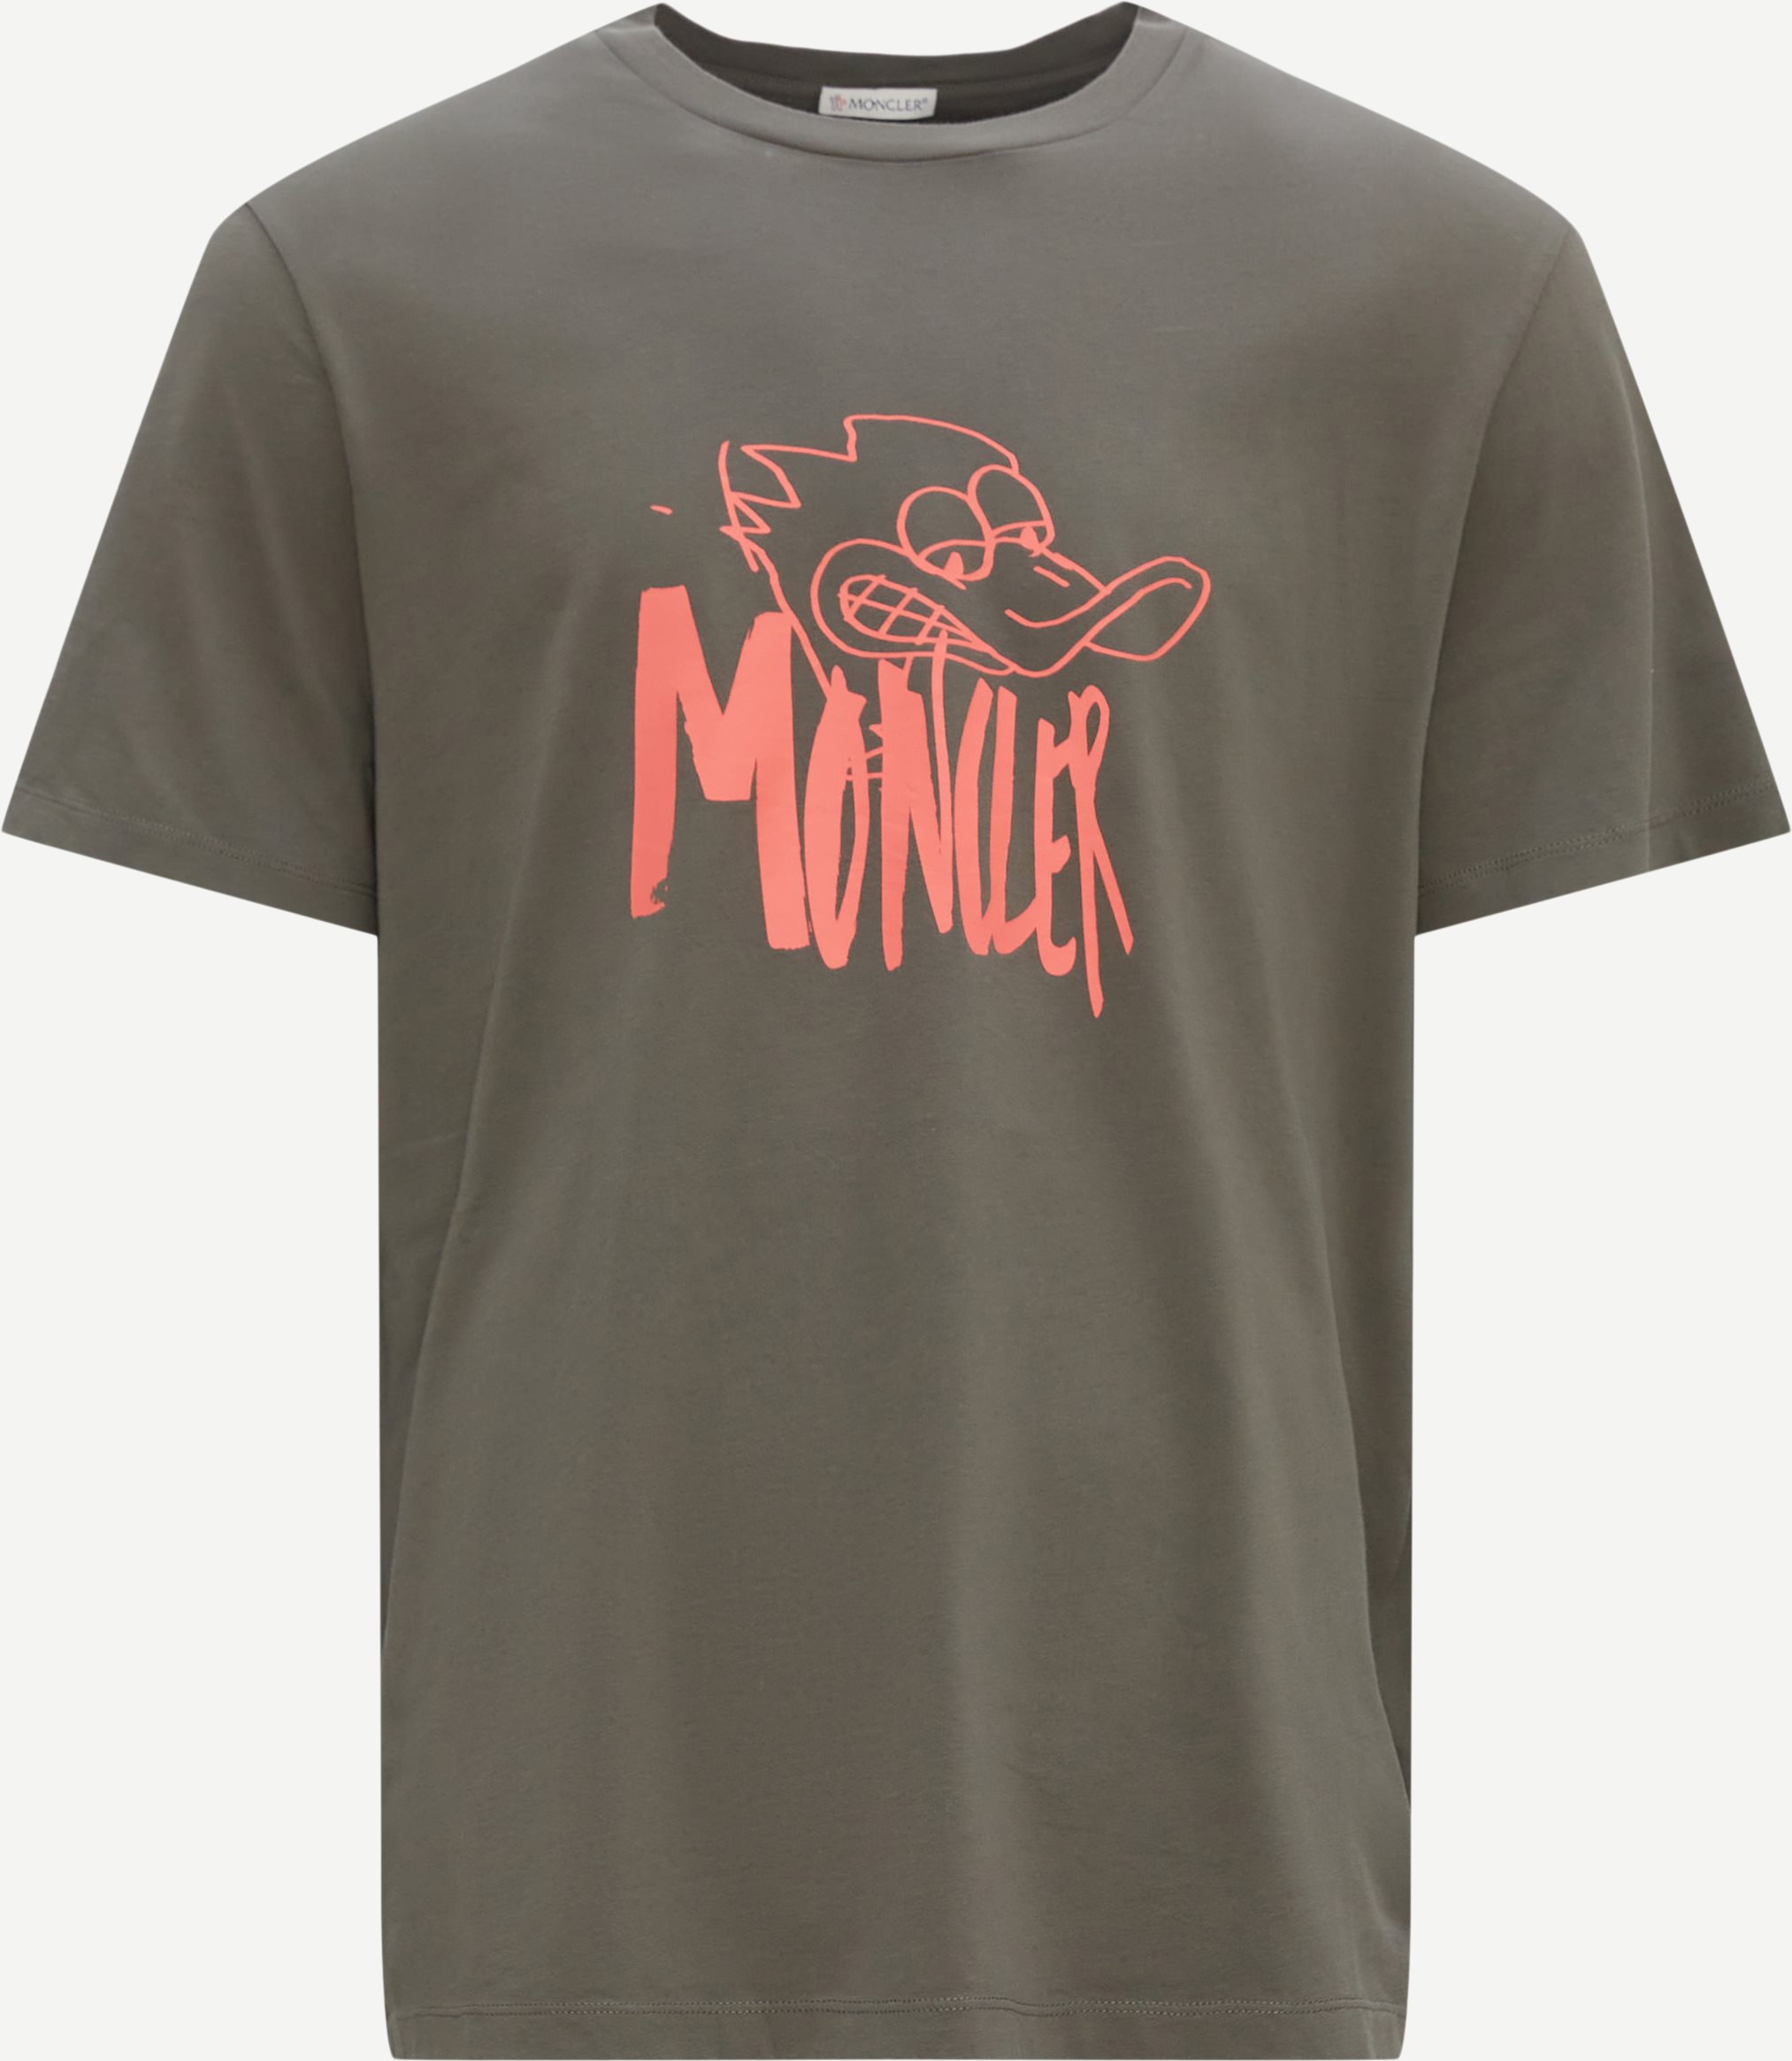 Moncler T-shirts 8C00030 829H8 Armé